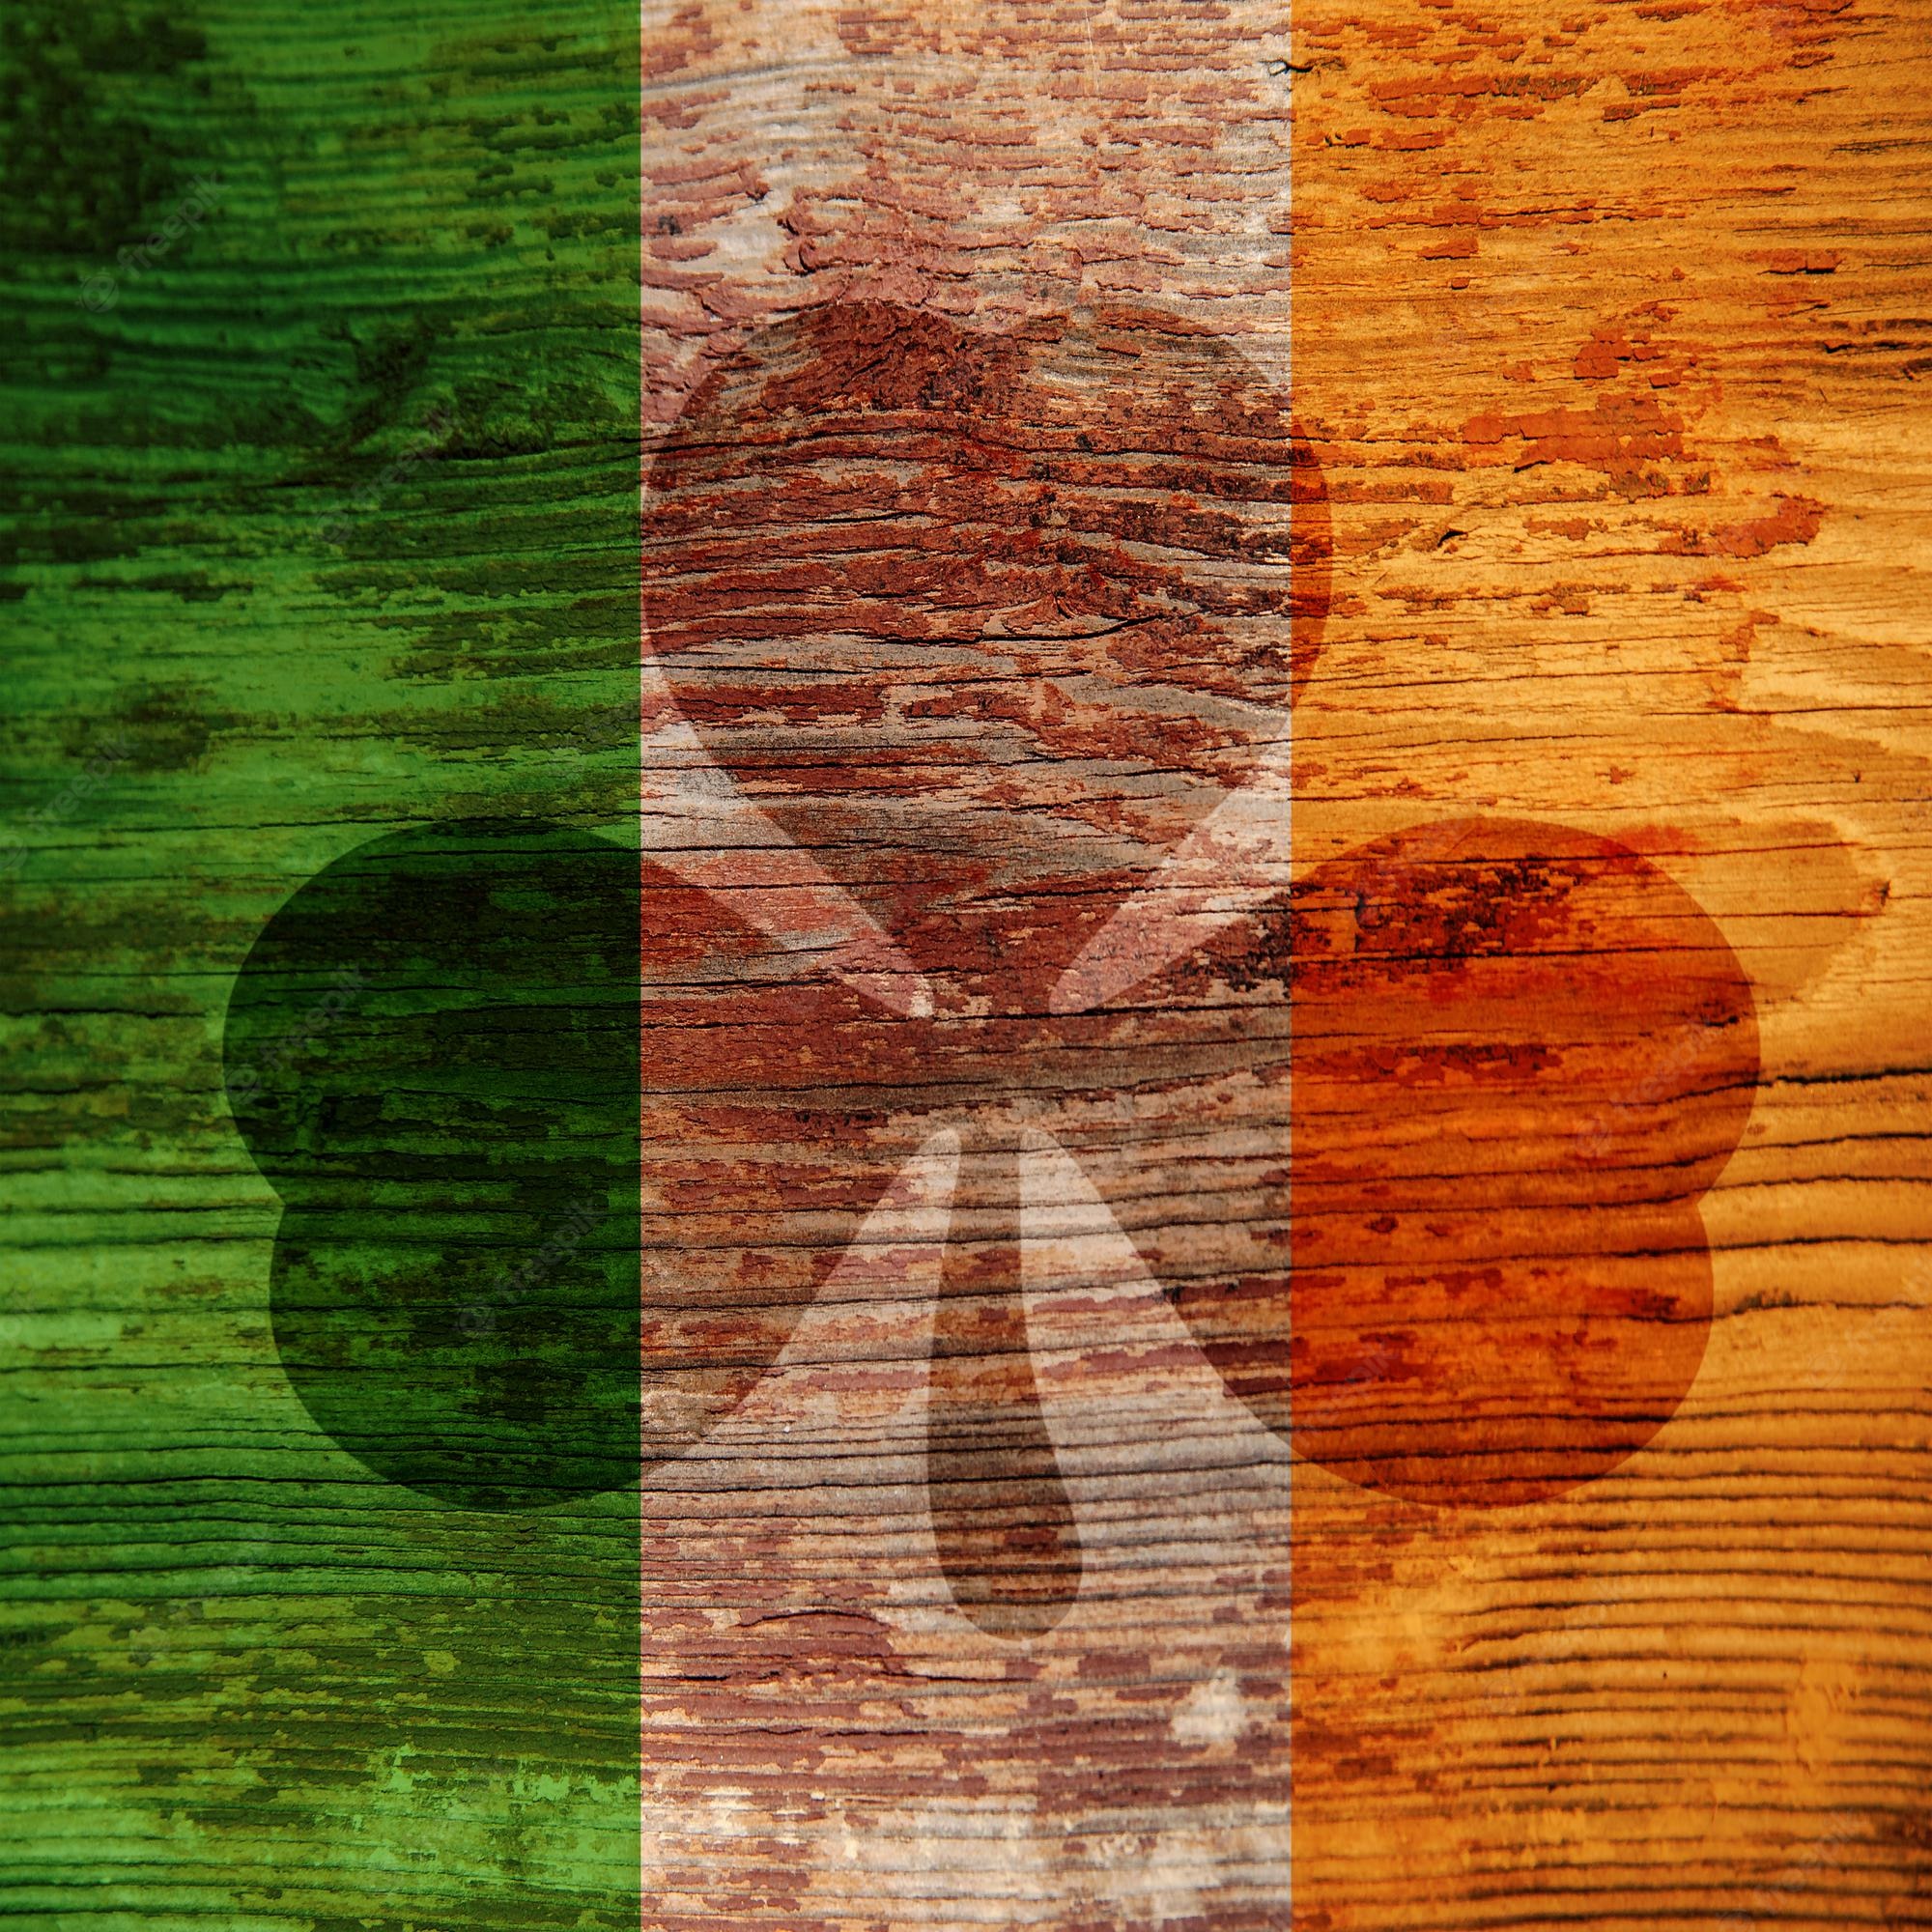 Irish Flag Iphone Wallpapers